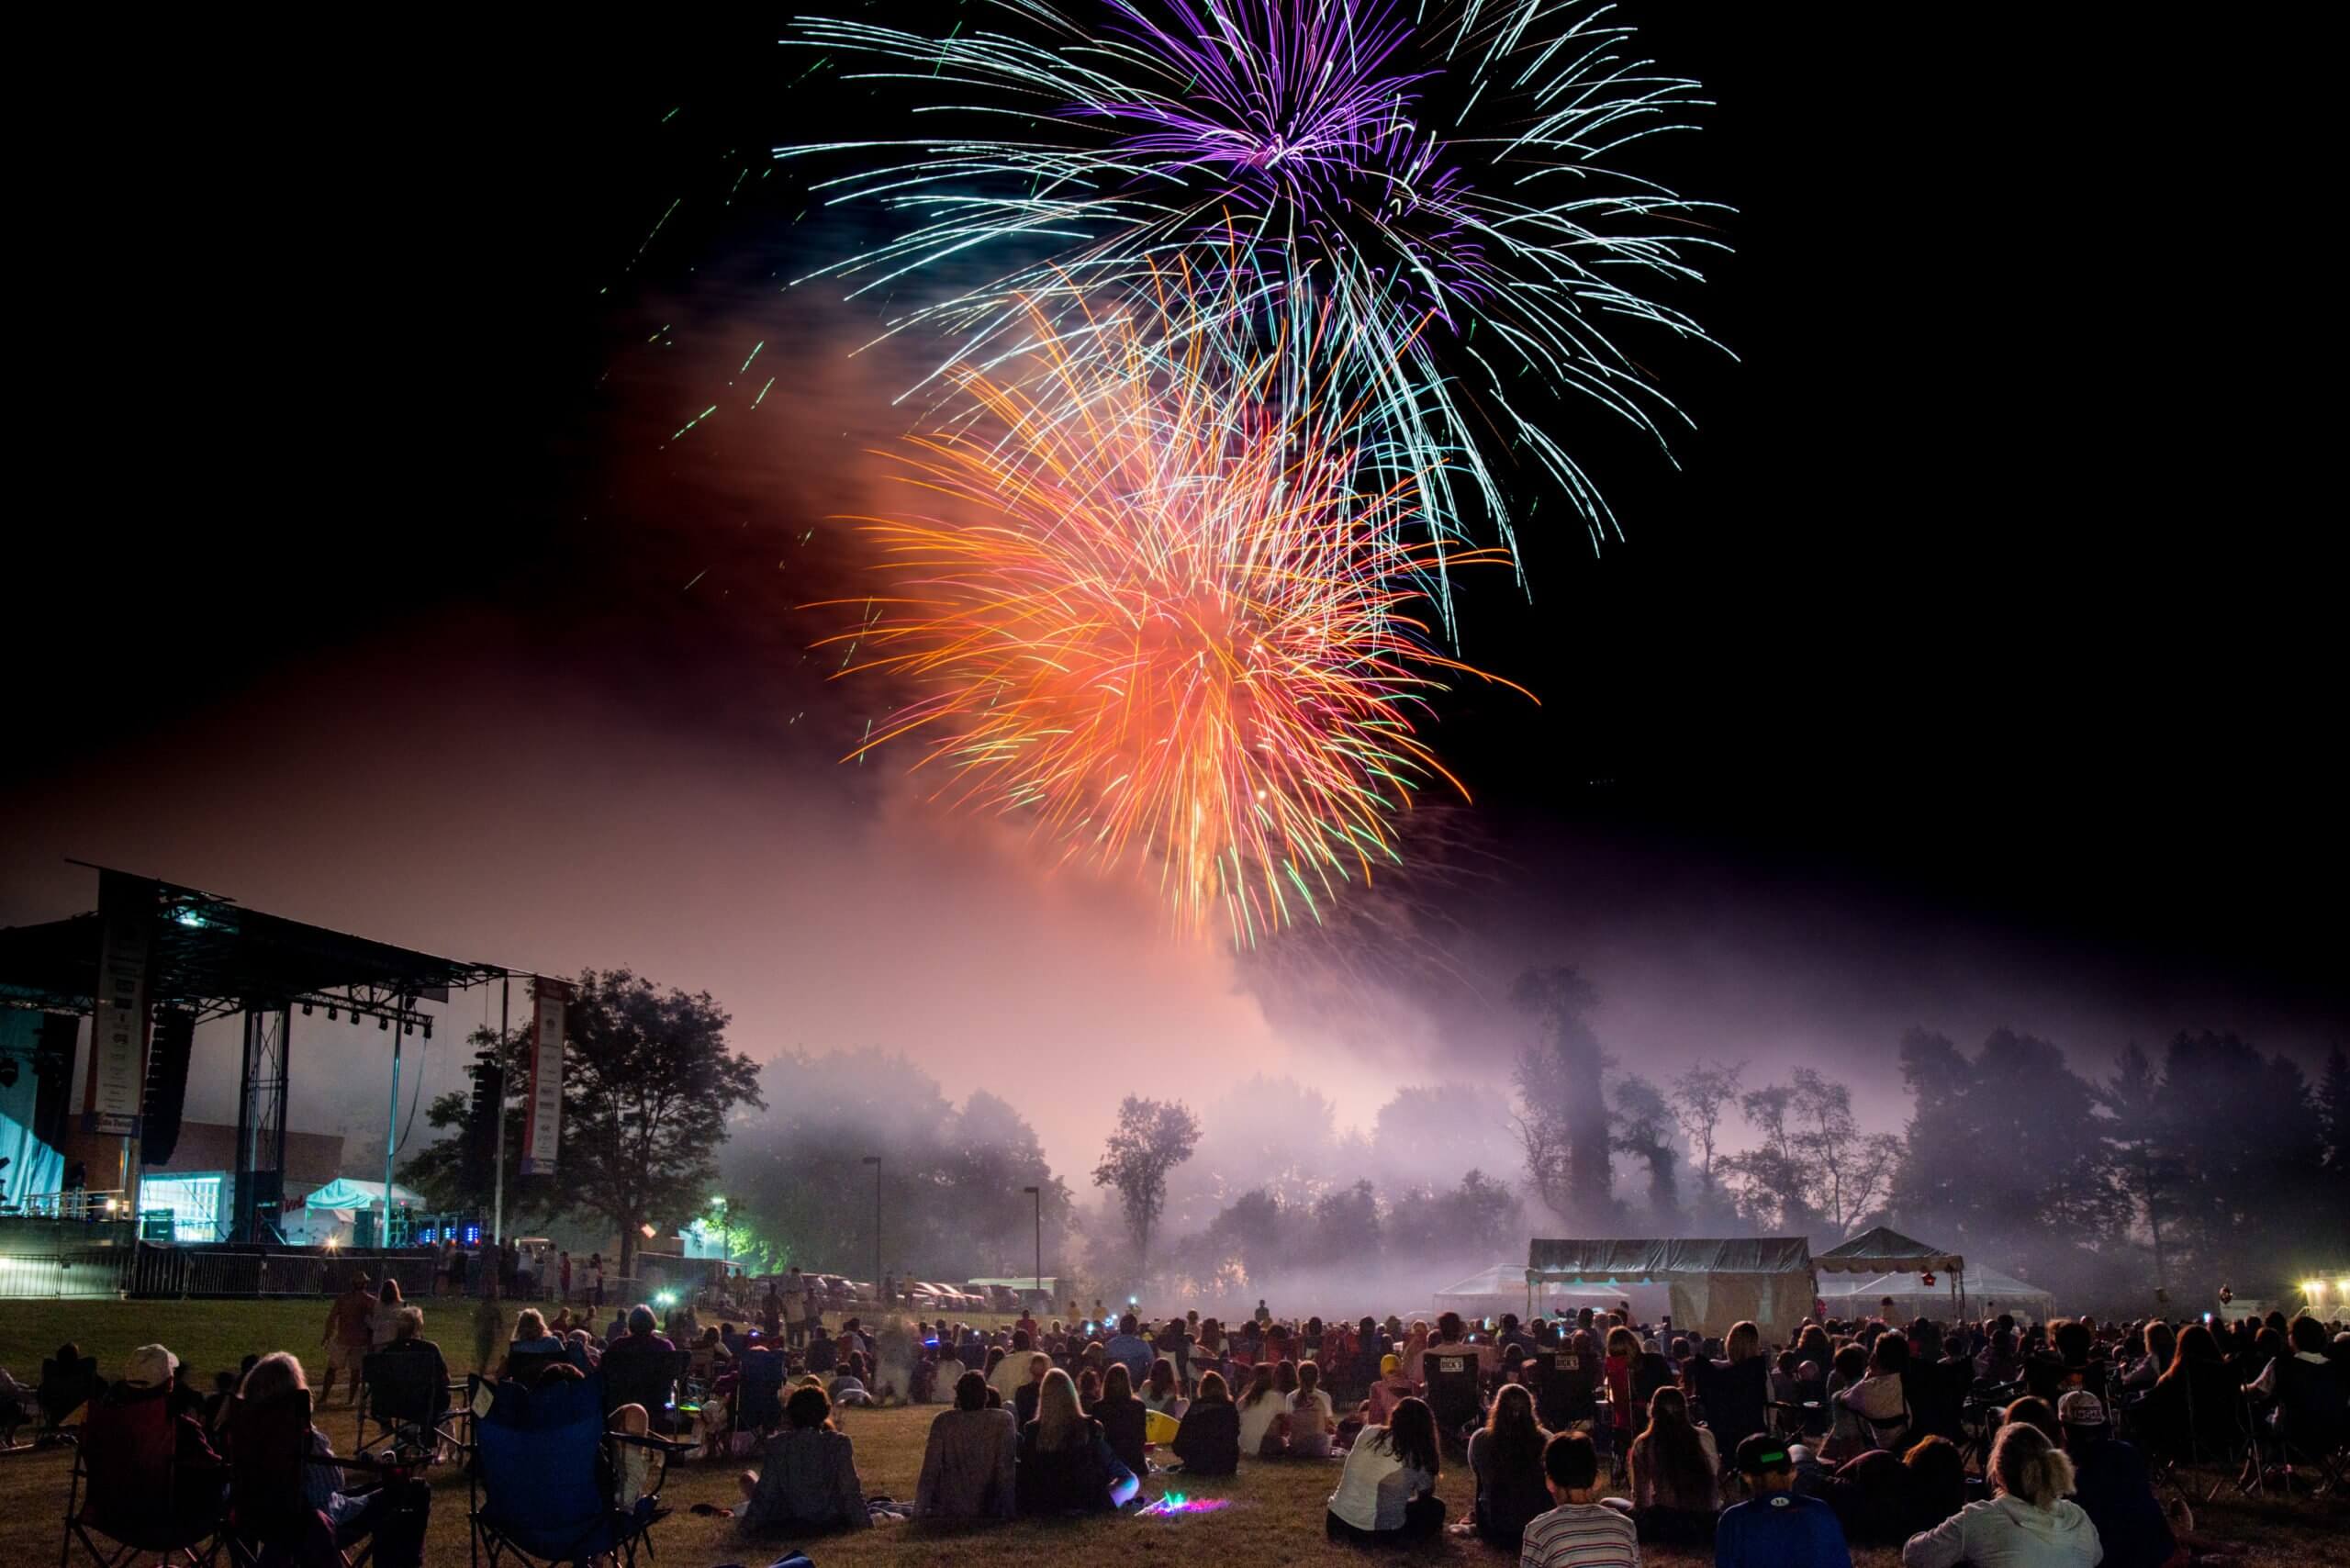 Lake Forest Festival & Fireworks Special Events Management